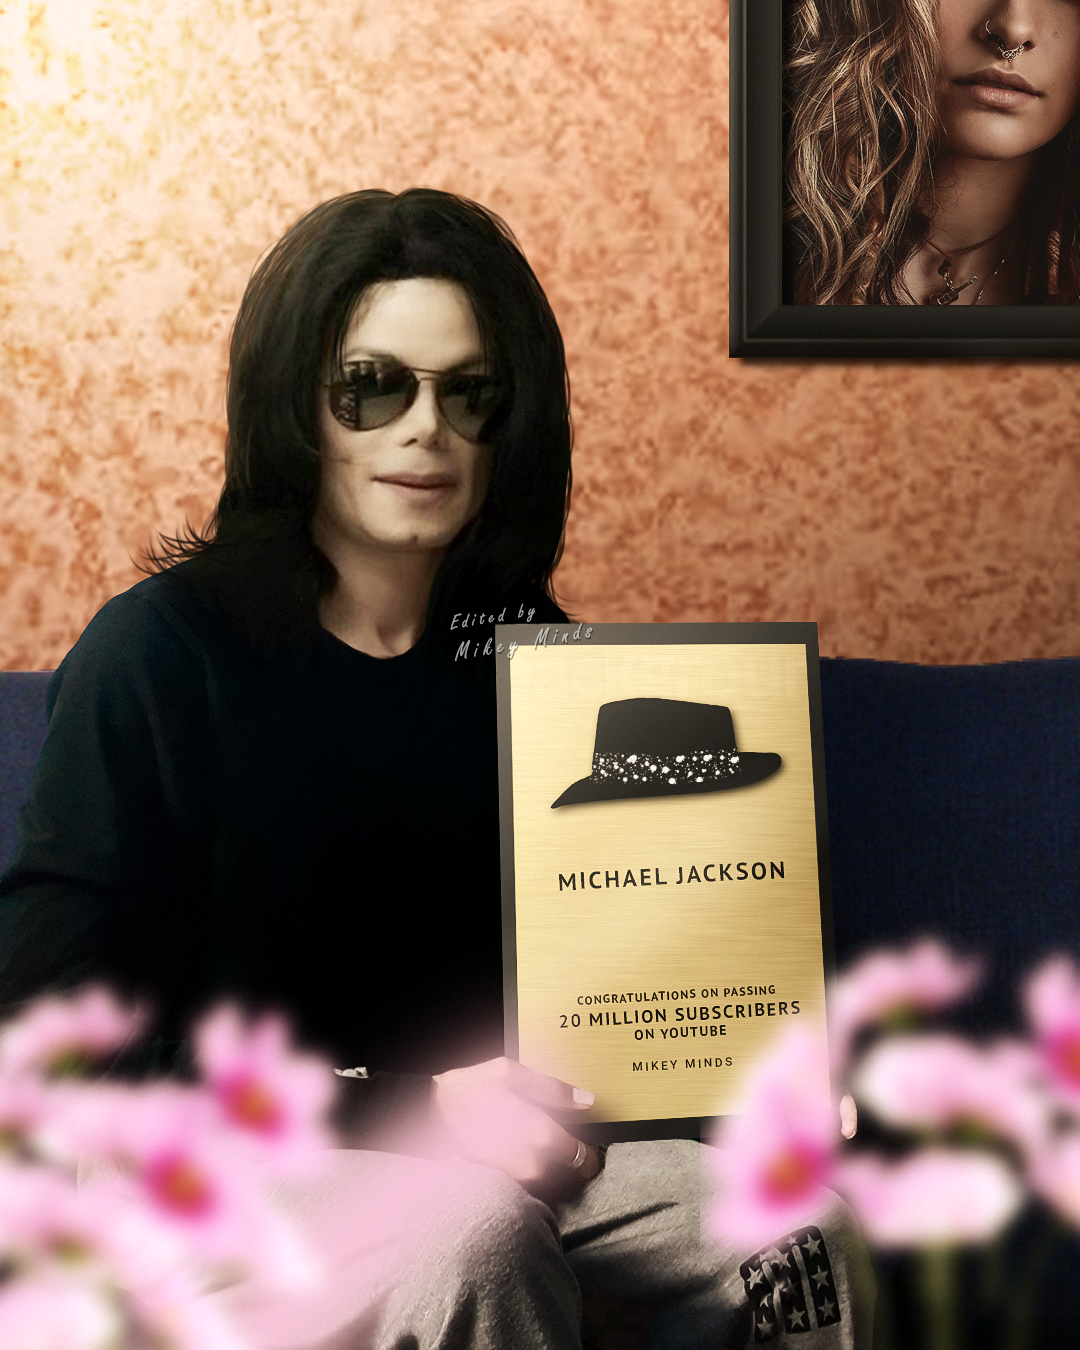 Michael Jackson Passes 20M Subscribers On YouTube